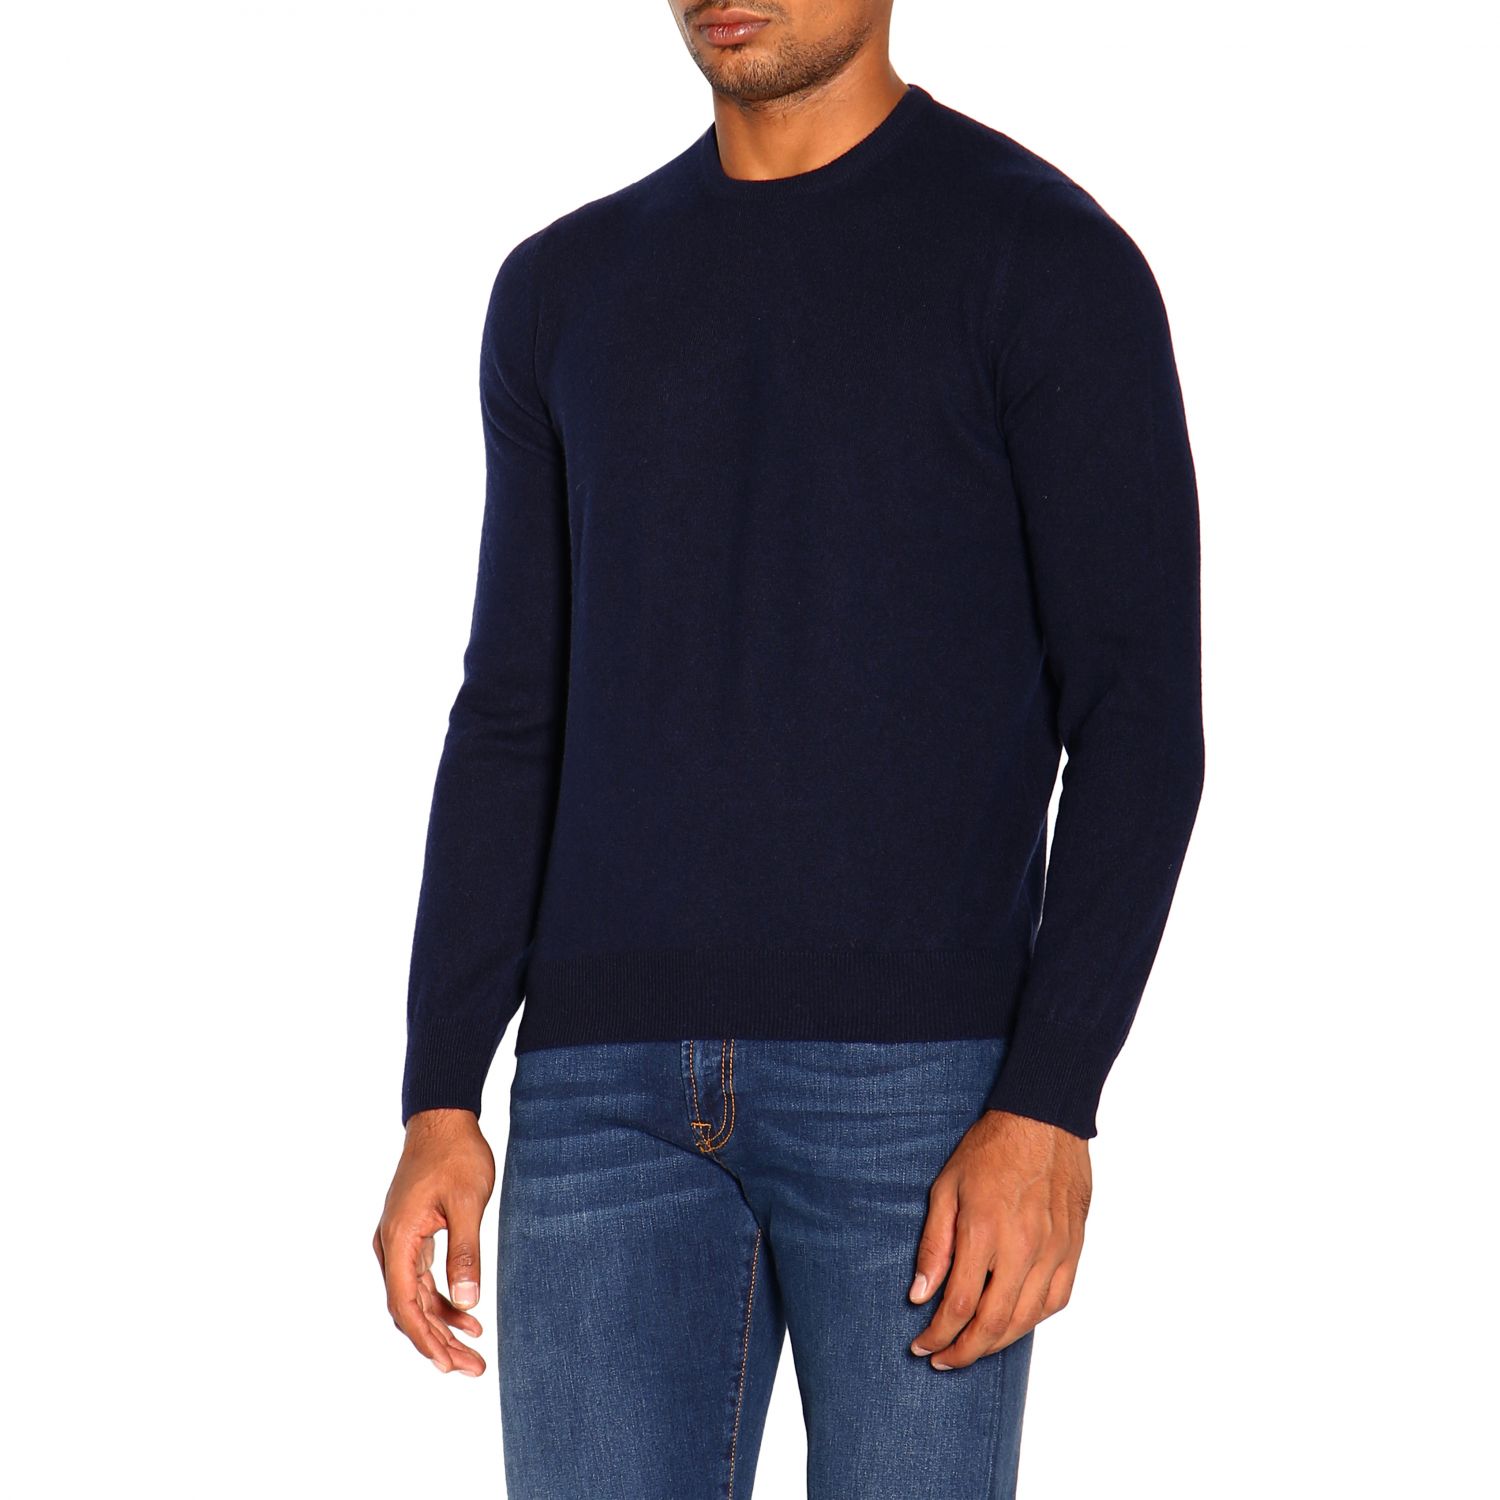 Gran Sasso Outlet: Sweatshirt men - Blue | Sweater Gran Sasso 55167 ...